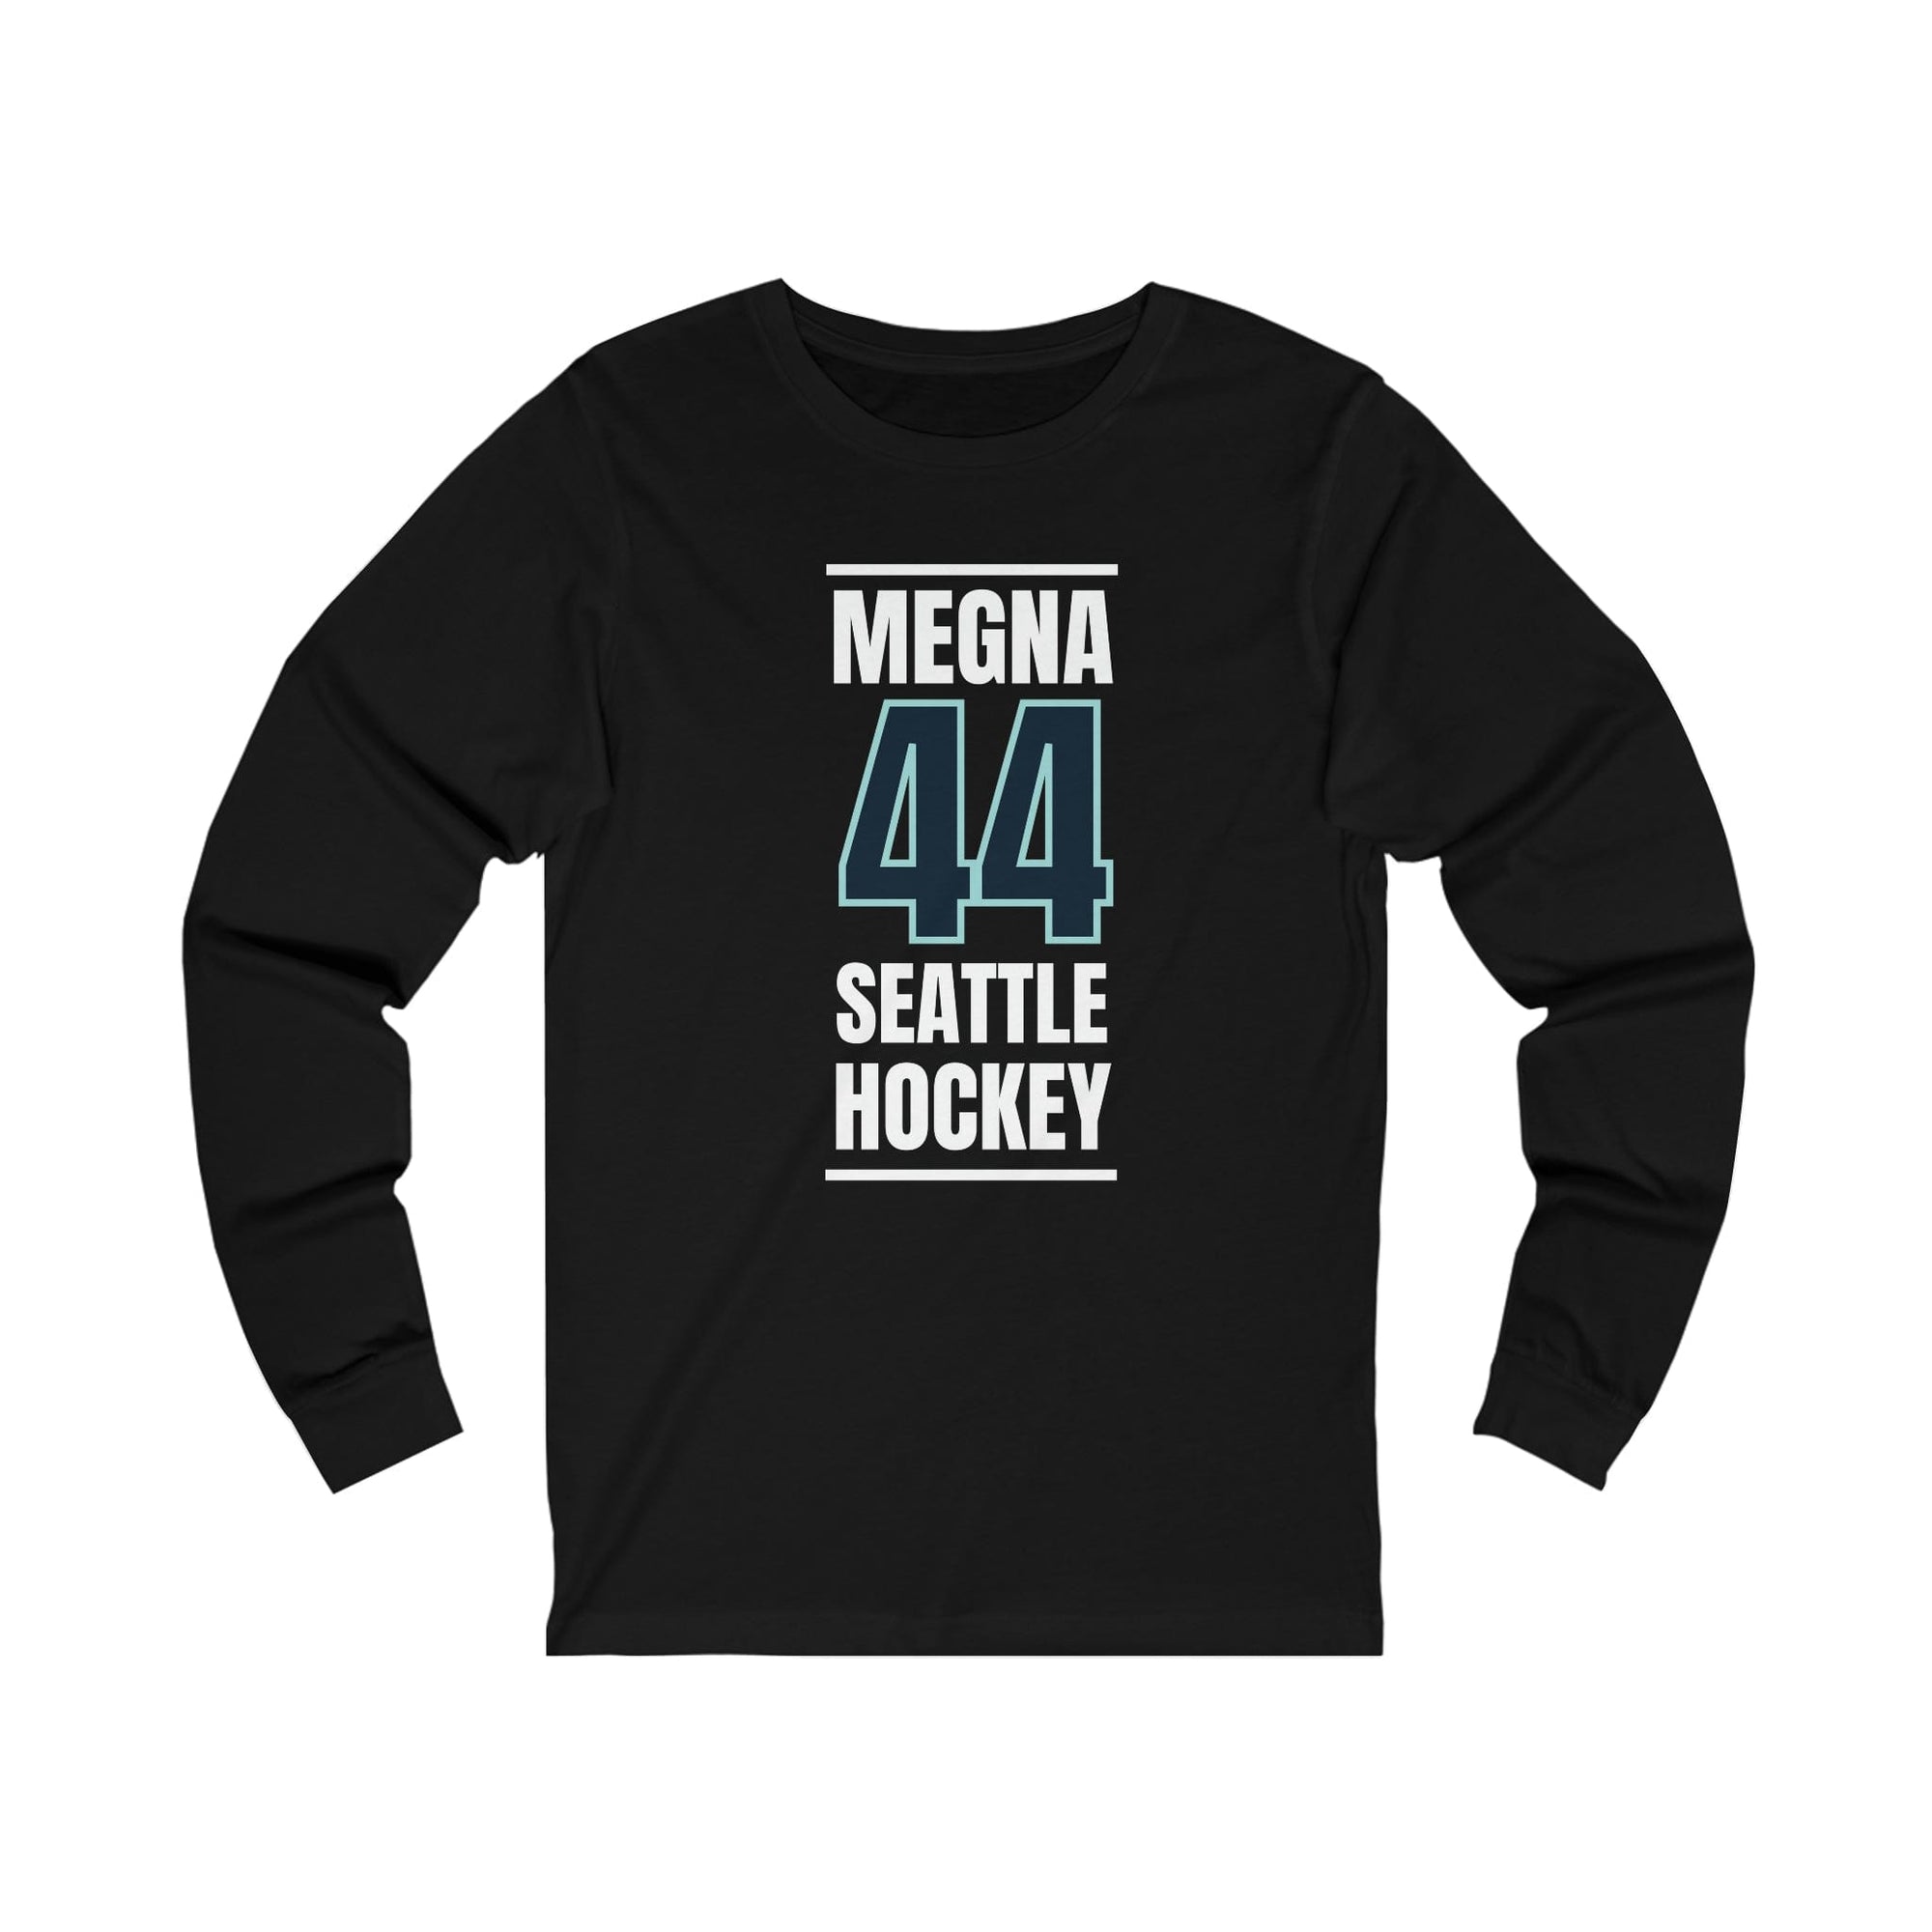 Long-sleeve Megna 44 Seattle Hockey Black Vertical Design Unisex Jersey Long Sleeve Shirt